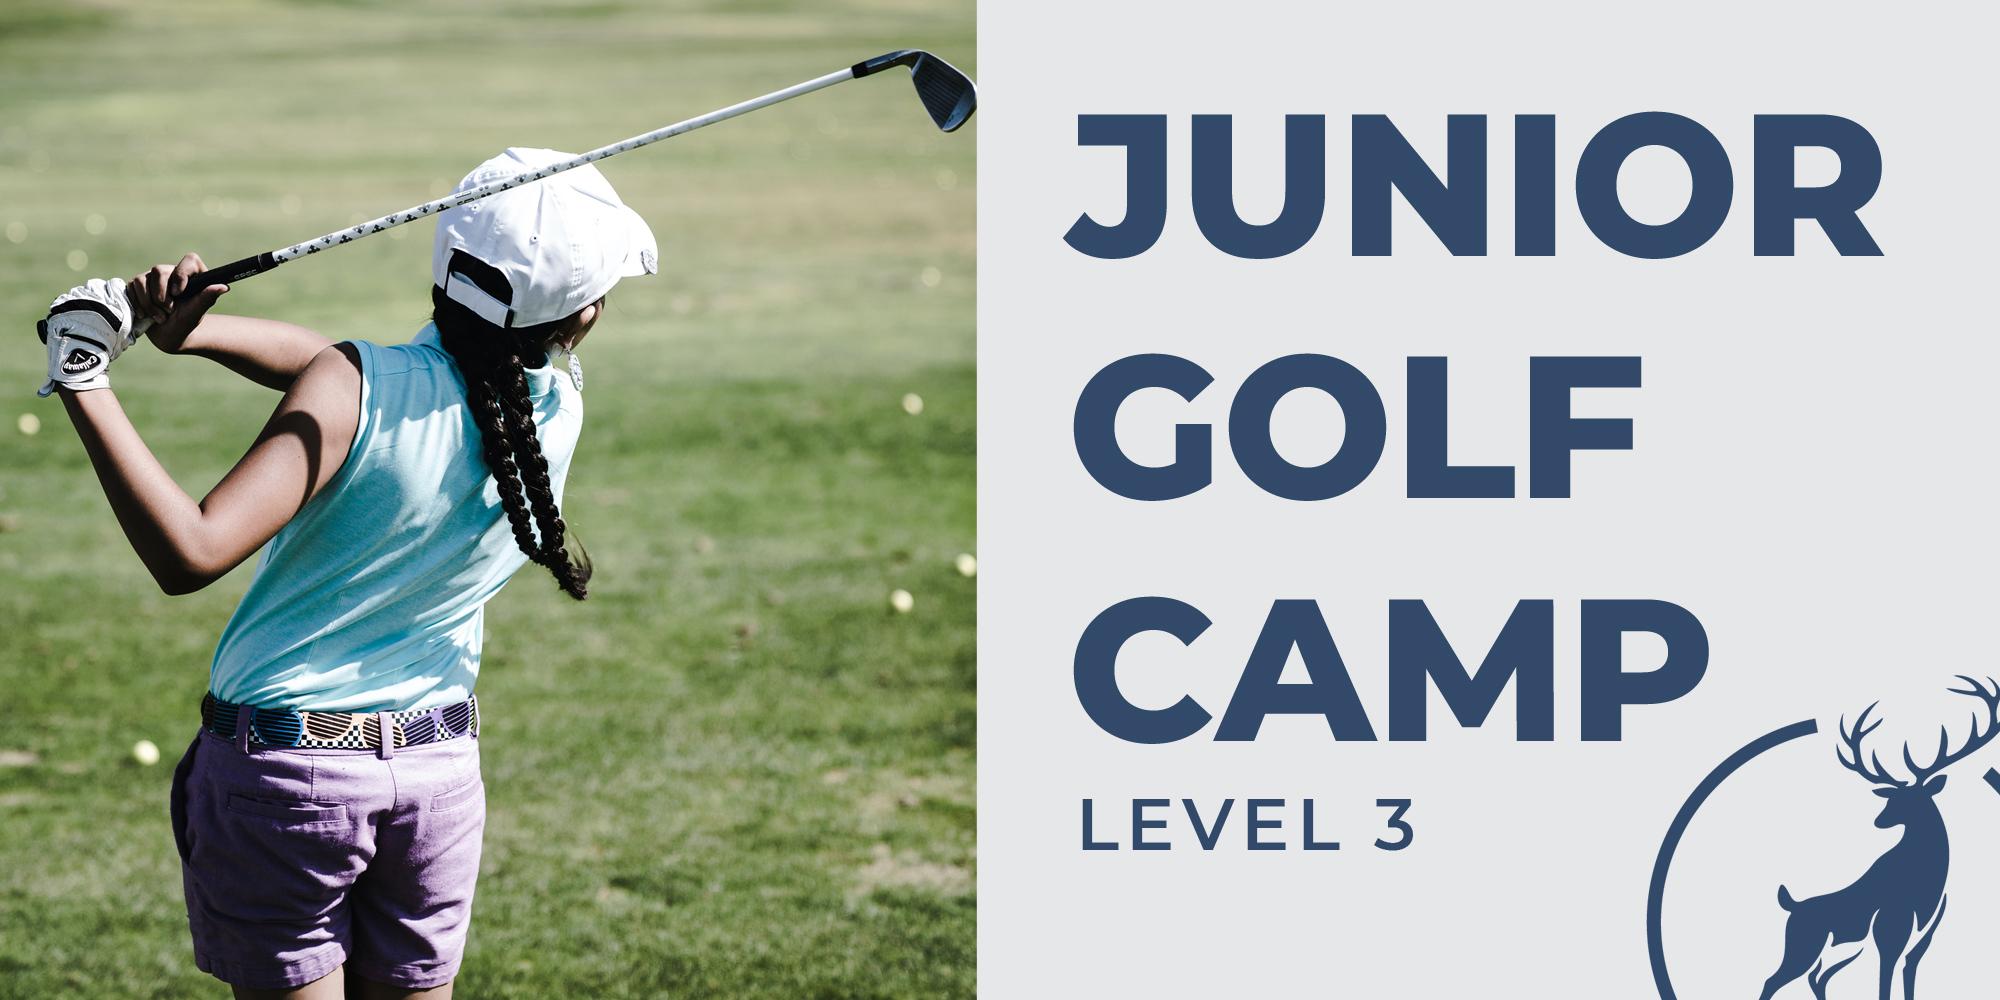 4 Day Junior Golf Camp - $135 - Level 3